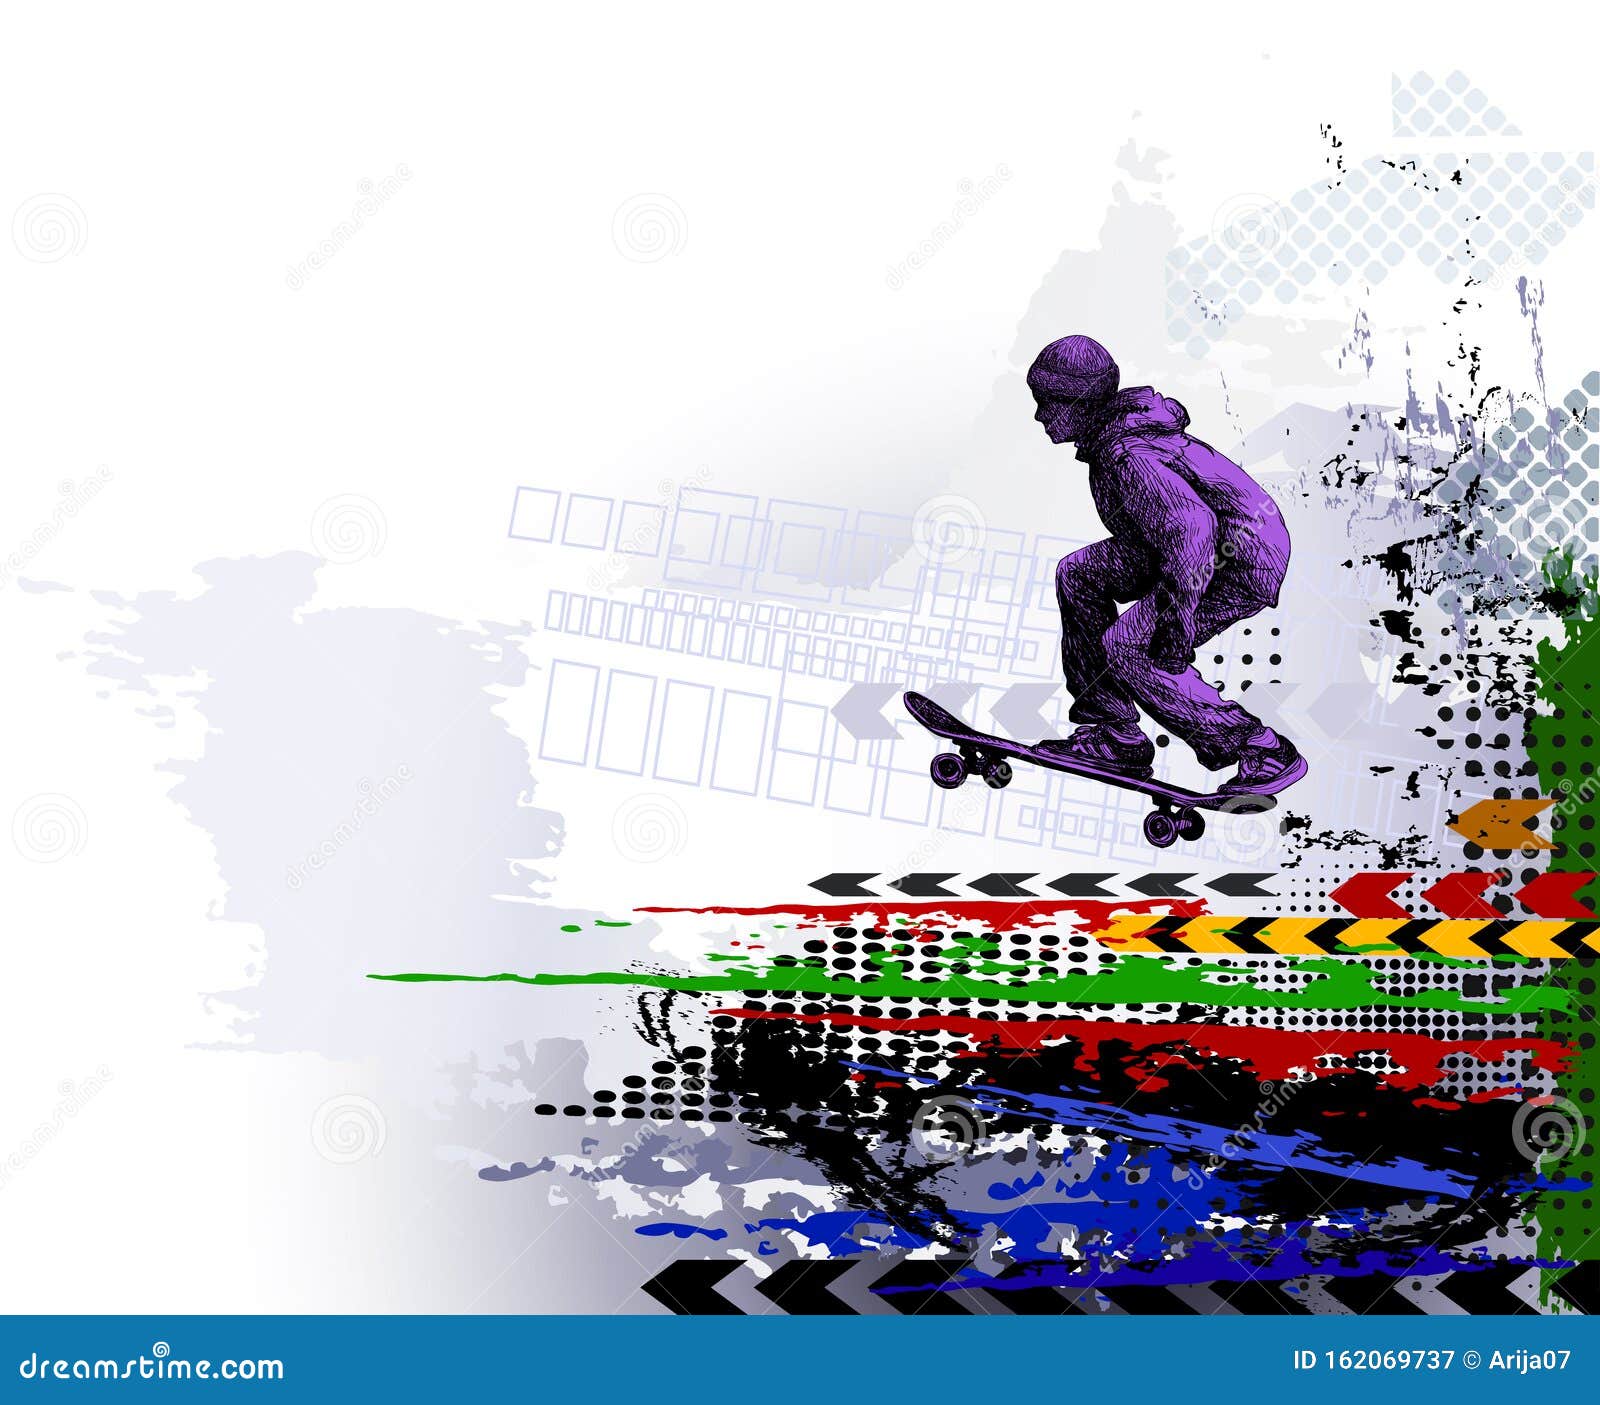 skateboarding background. extreme sports  with guy skater